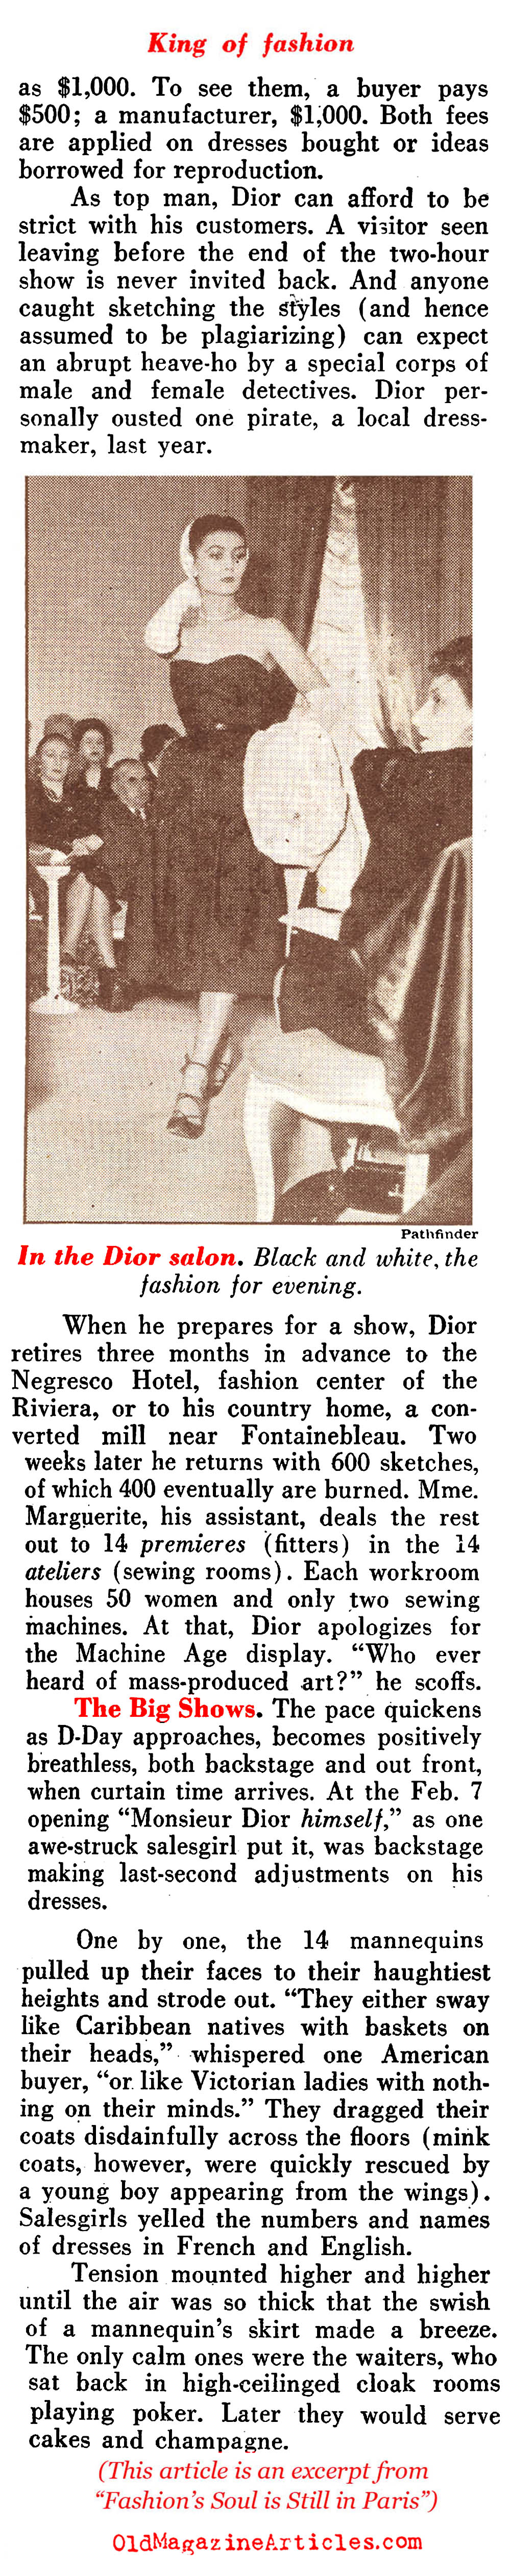 Fashion's Rainmaker (Pathfinder Magazine, 1951)